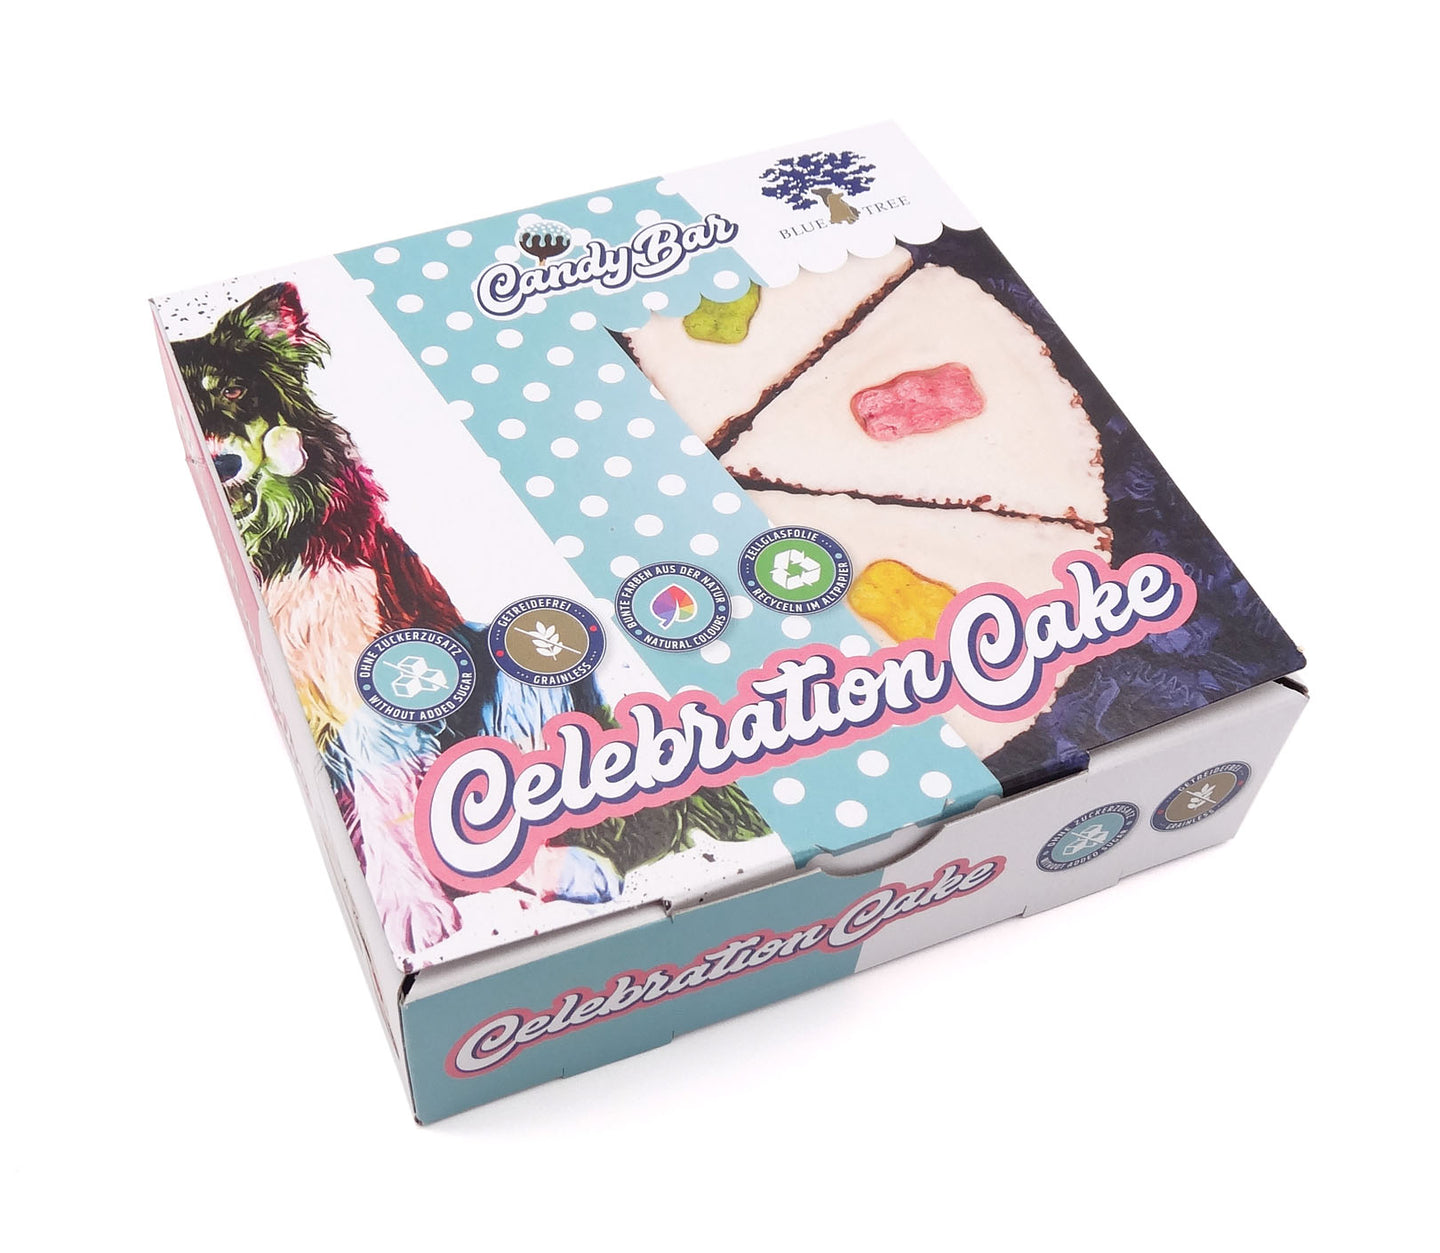 Celebration Cake - the Special Dog Cake